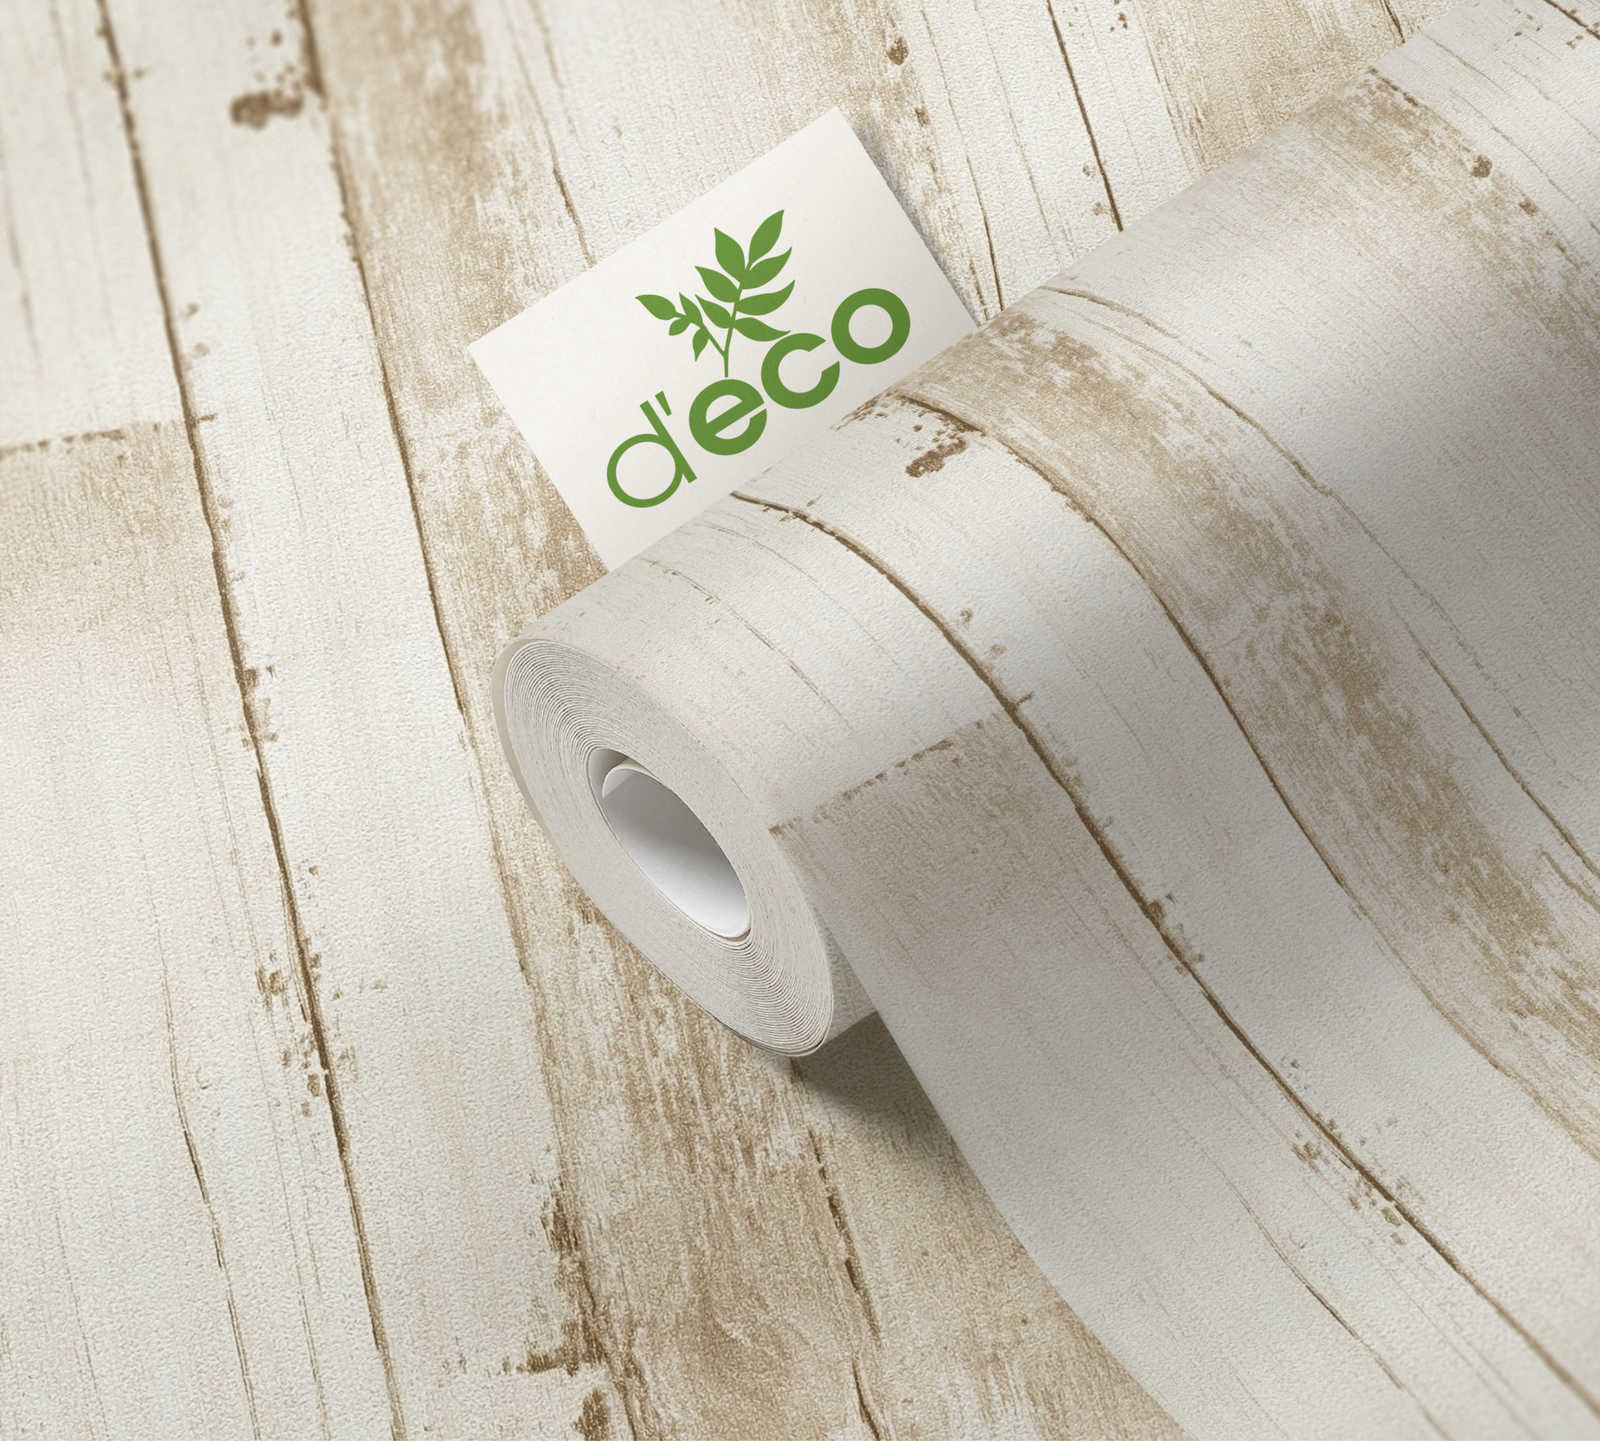             Holz-Vliestapete mit Bretteroptik PVC-frei – Beige, Weiß
        